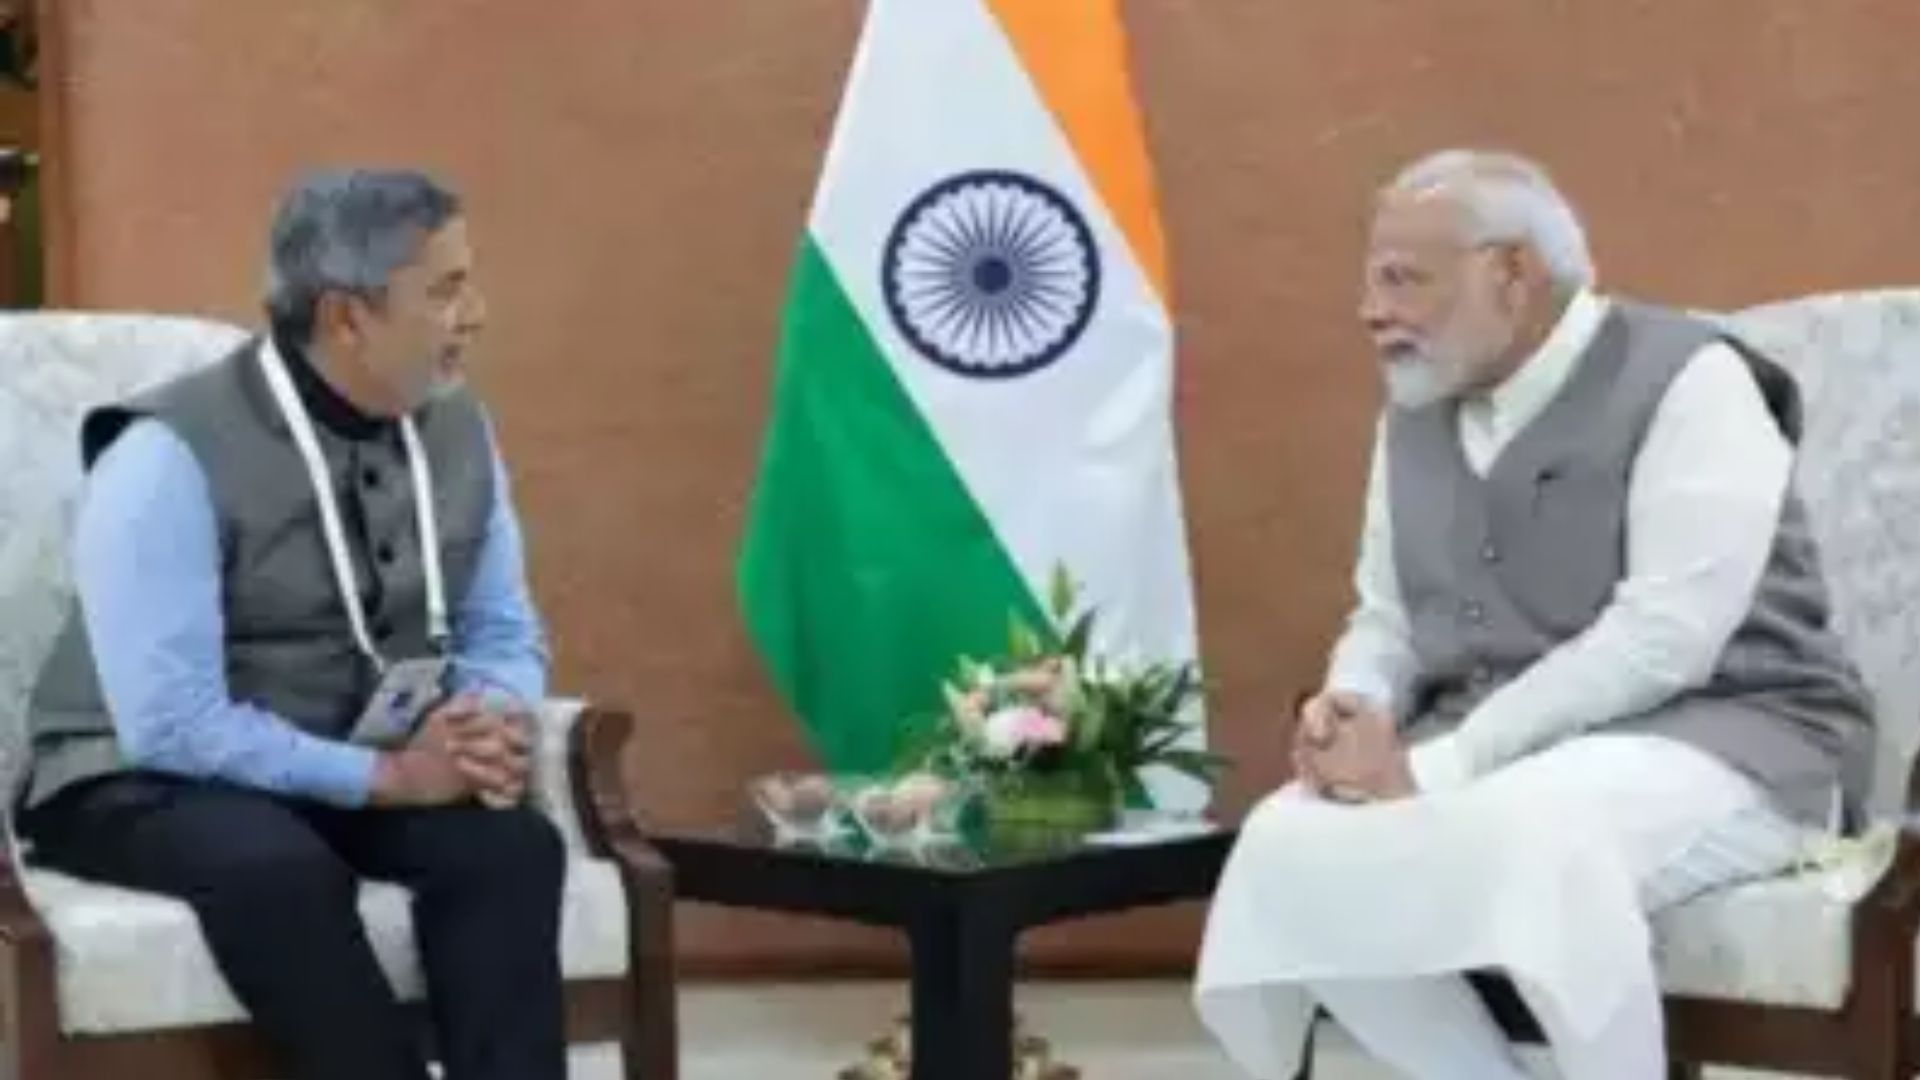 PM Modi and Micron CEO discuss India’s semiconductor manufacturing ecosystem